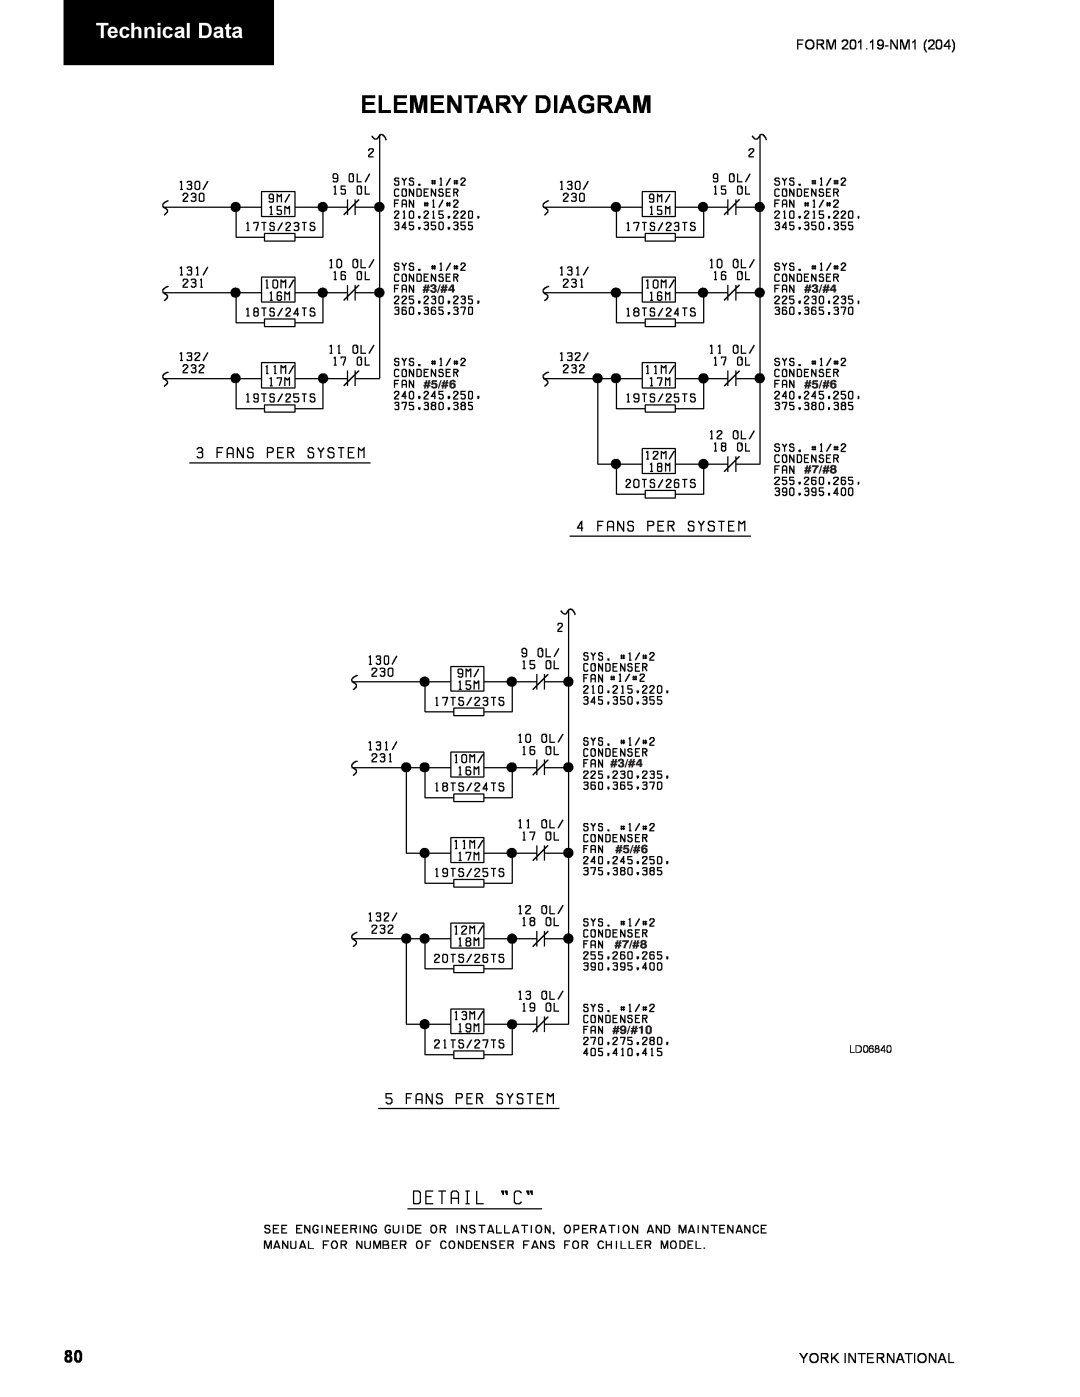 York YCAS0130 manual Elementary Diagram, Technical Data, #7/#8 #3/#4 #5/#6 #7/#8 #9/#10 